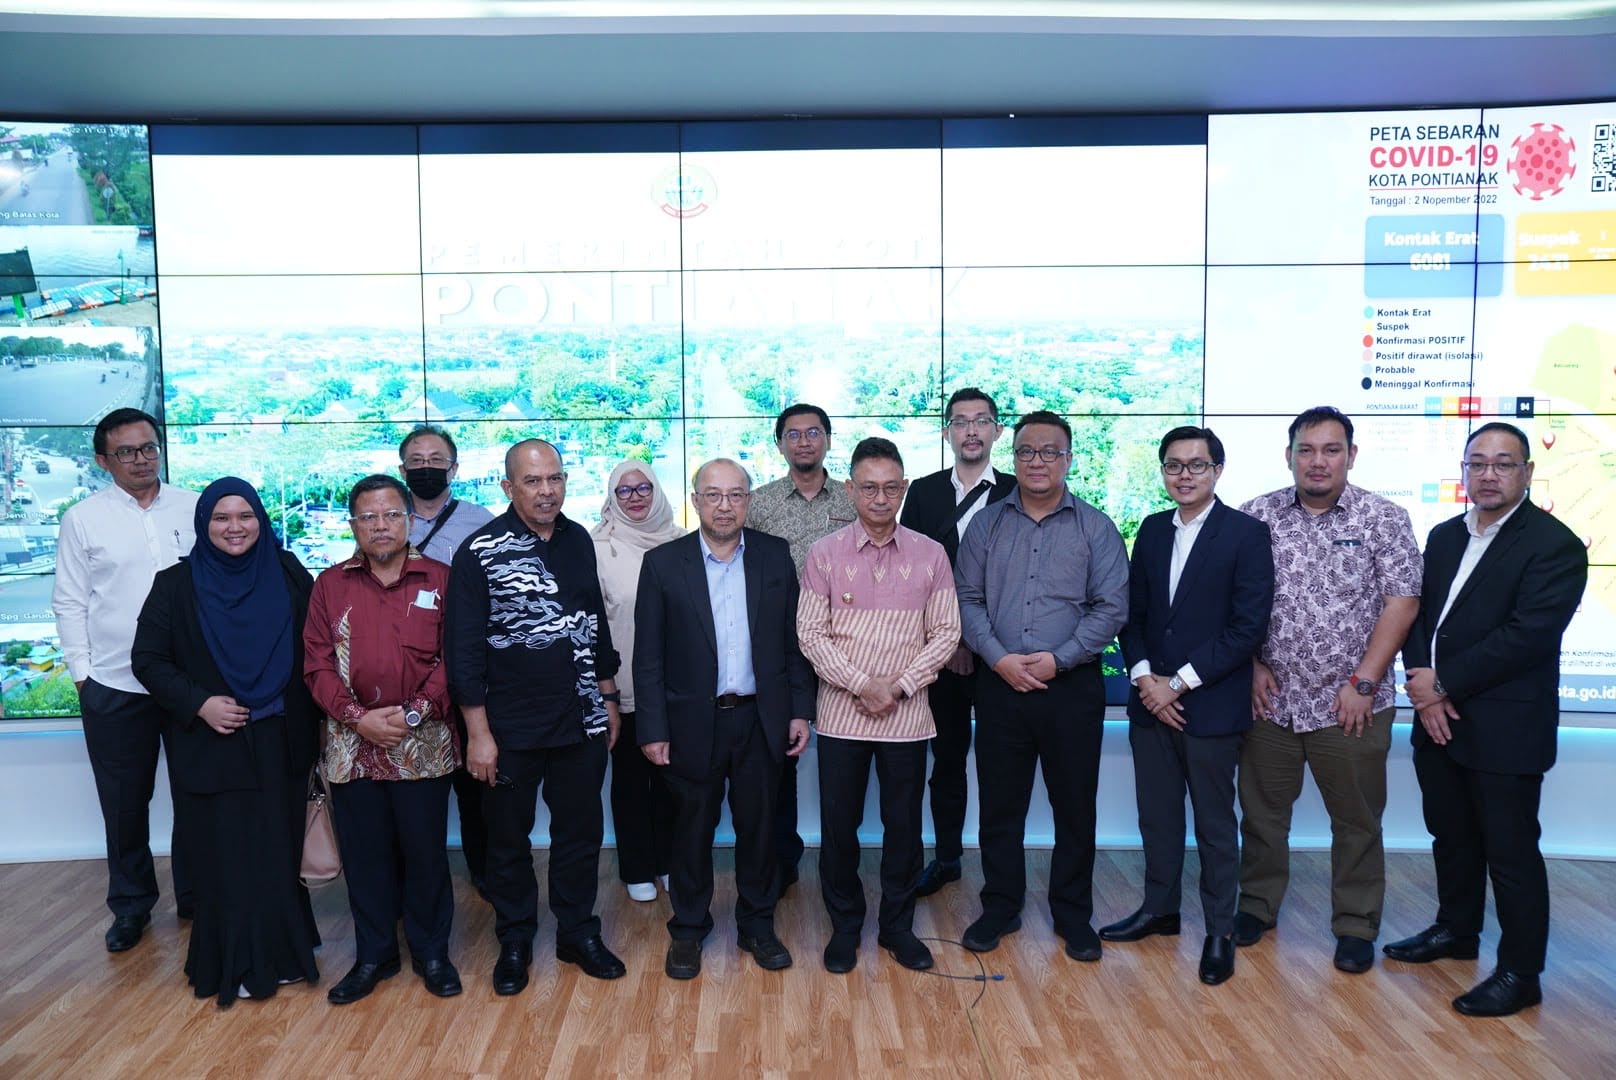 Wali Kota Pontianak, Edi Rusdi Kamtono (tengah) berfoto bersama dengan sejumlah pengusaha asal Kuching Sarawak Malaysia. (Prokopim For KalbarOnline.com)